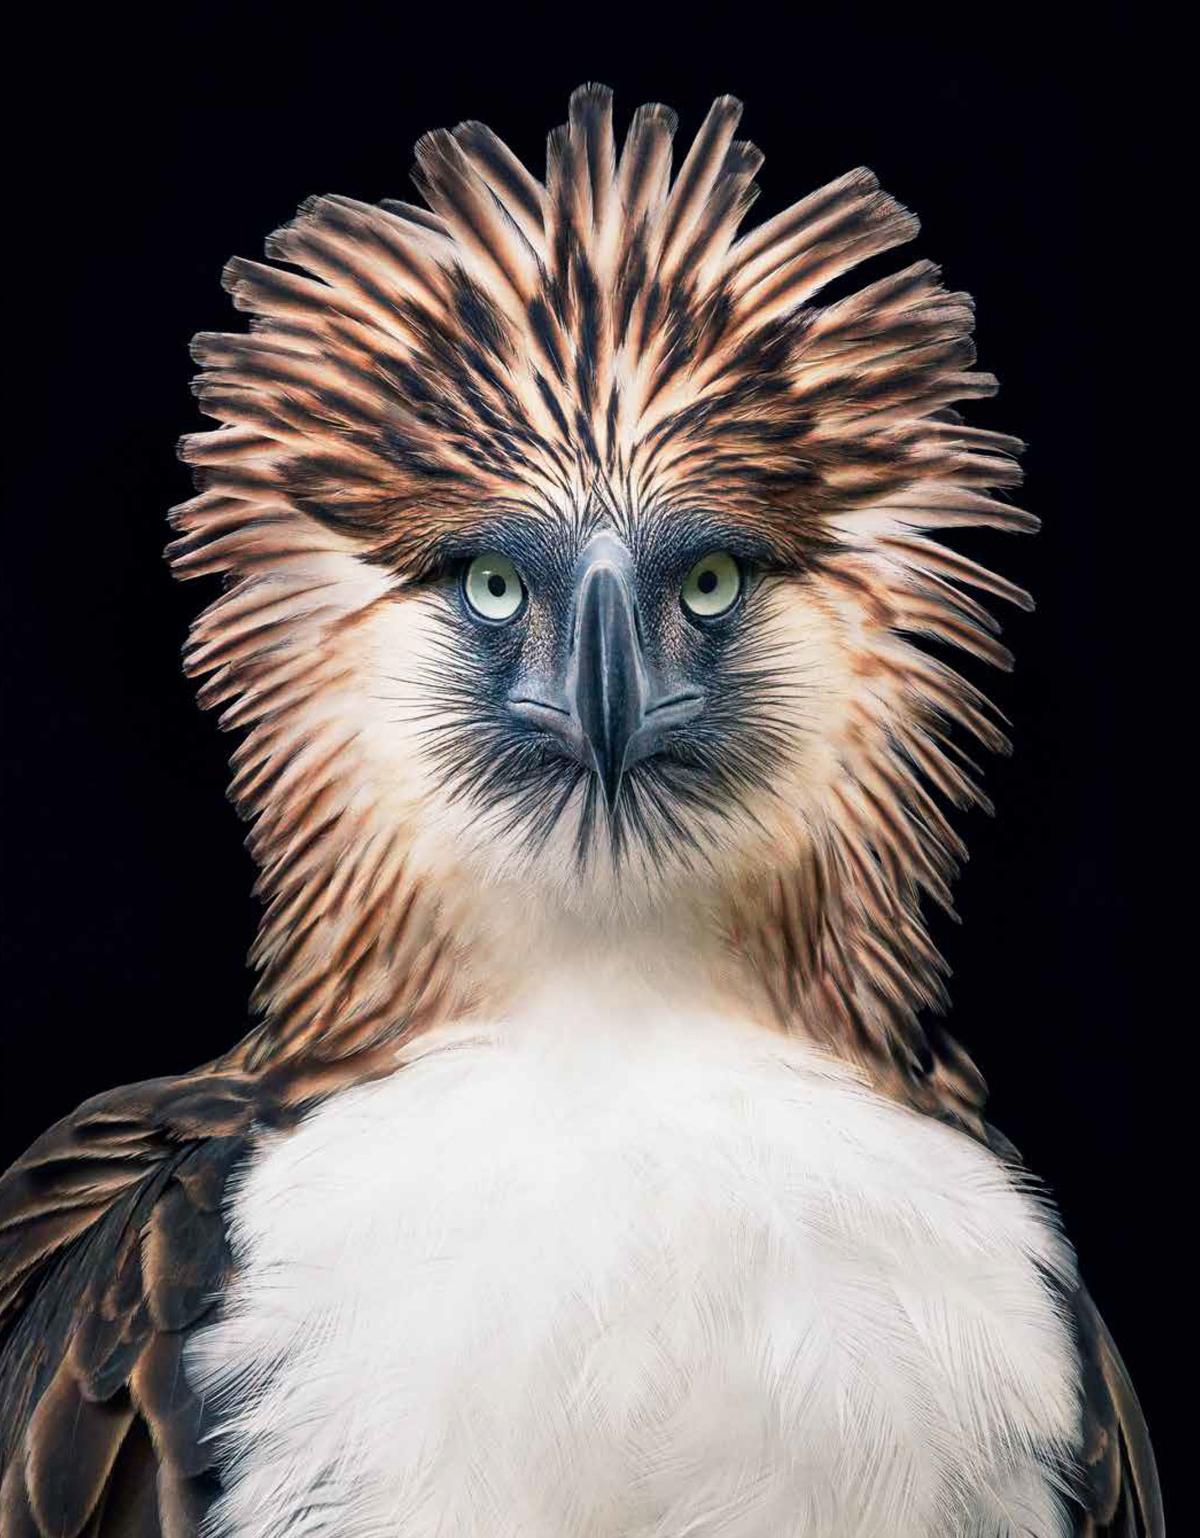 A Philippine eagle. (Courtesy of <a href="https://timflach.com/">Tim Flach</a>)